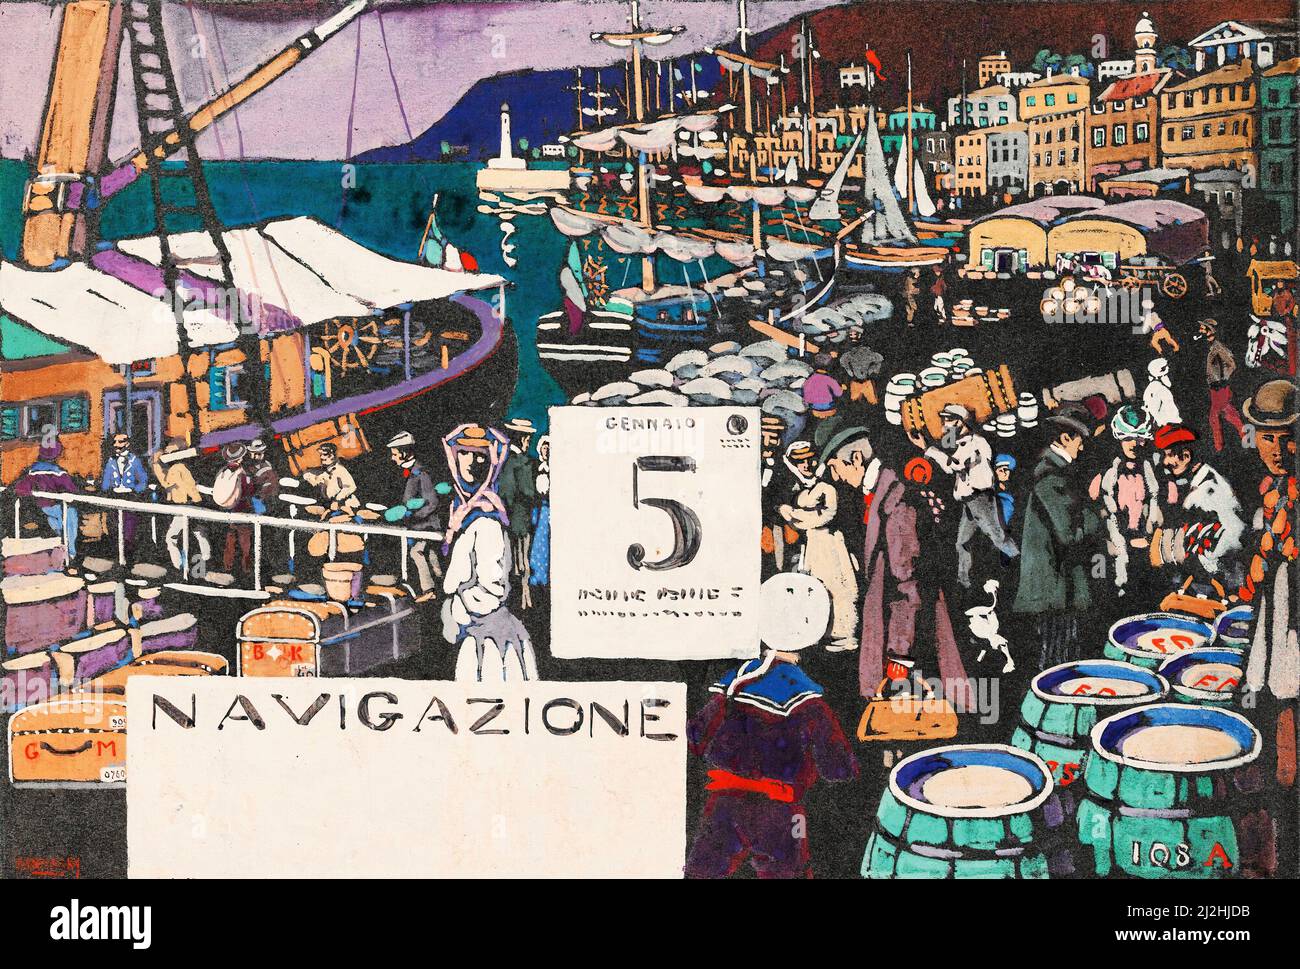 Arte vintage di Wassily Kandinsky - navigazione - Entwurf Fur Ein Schiffsplakat (Studio per un Poster della nave) (1906). Foto Stock